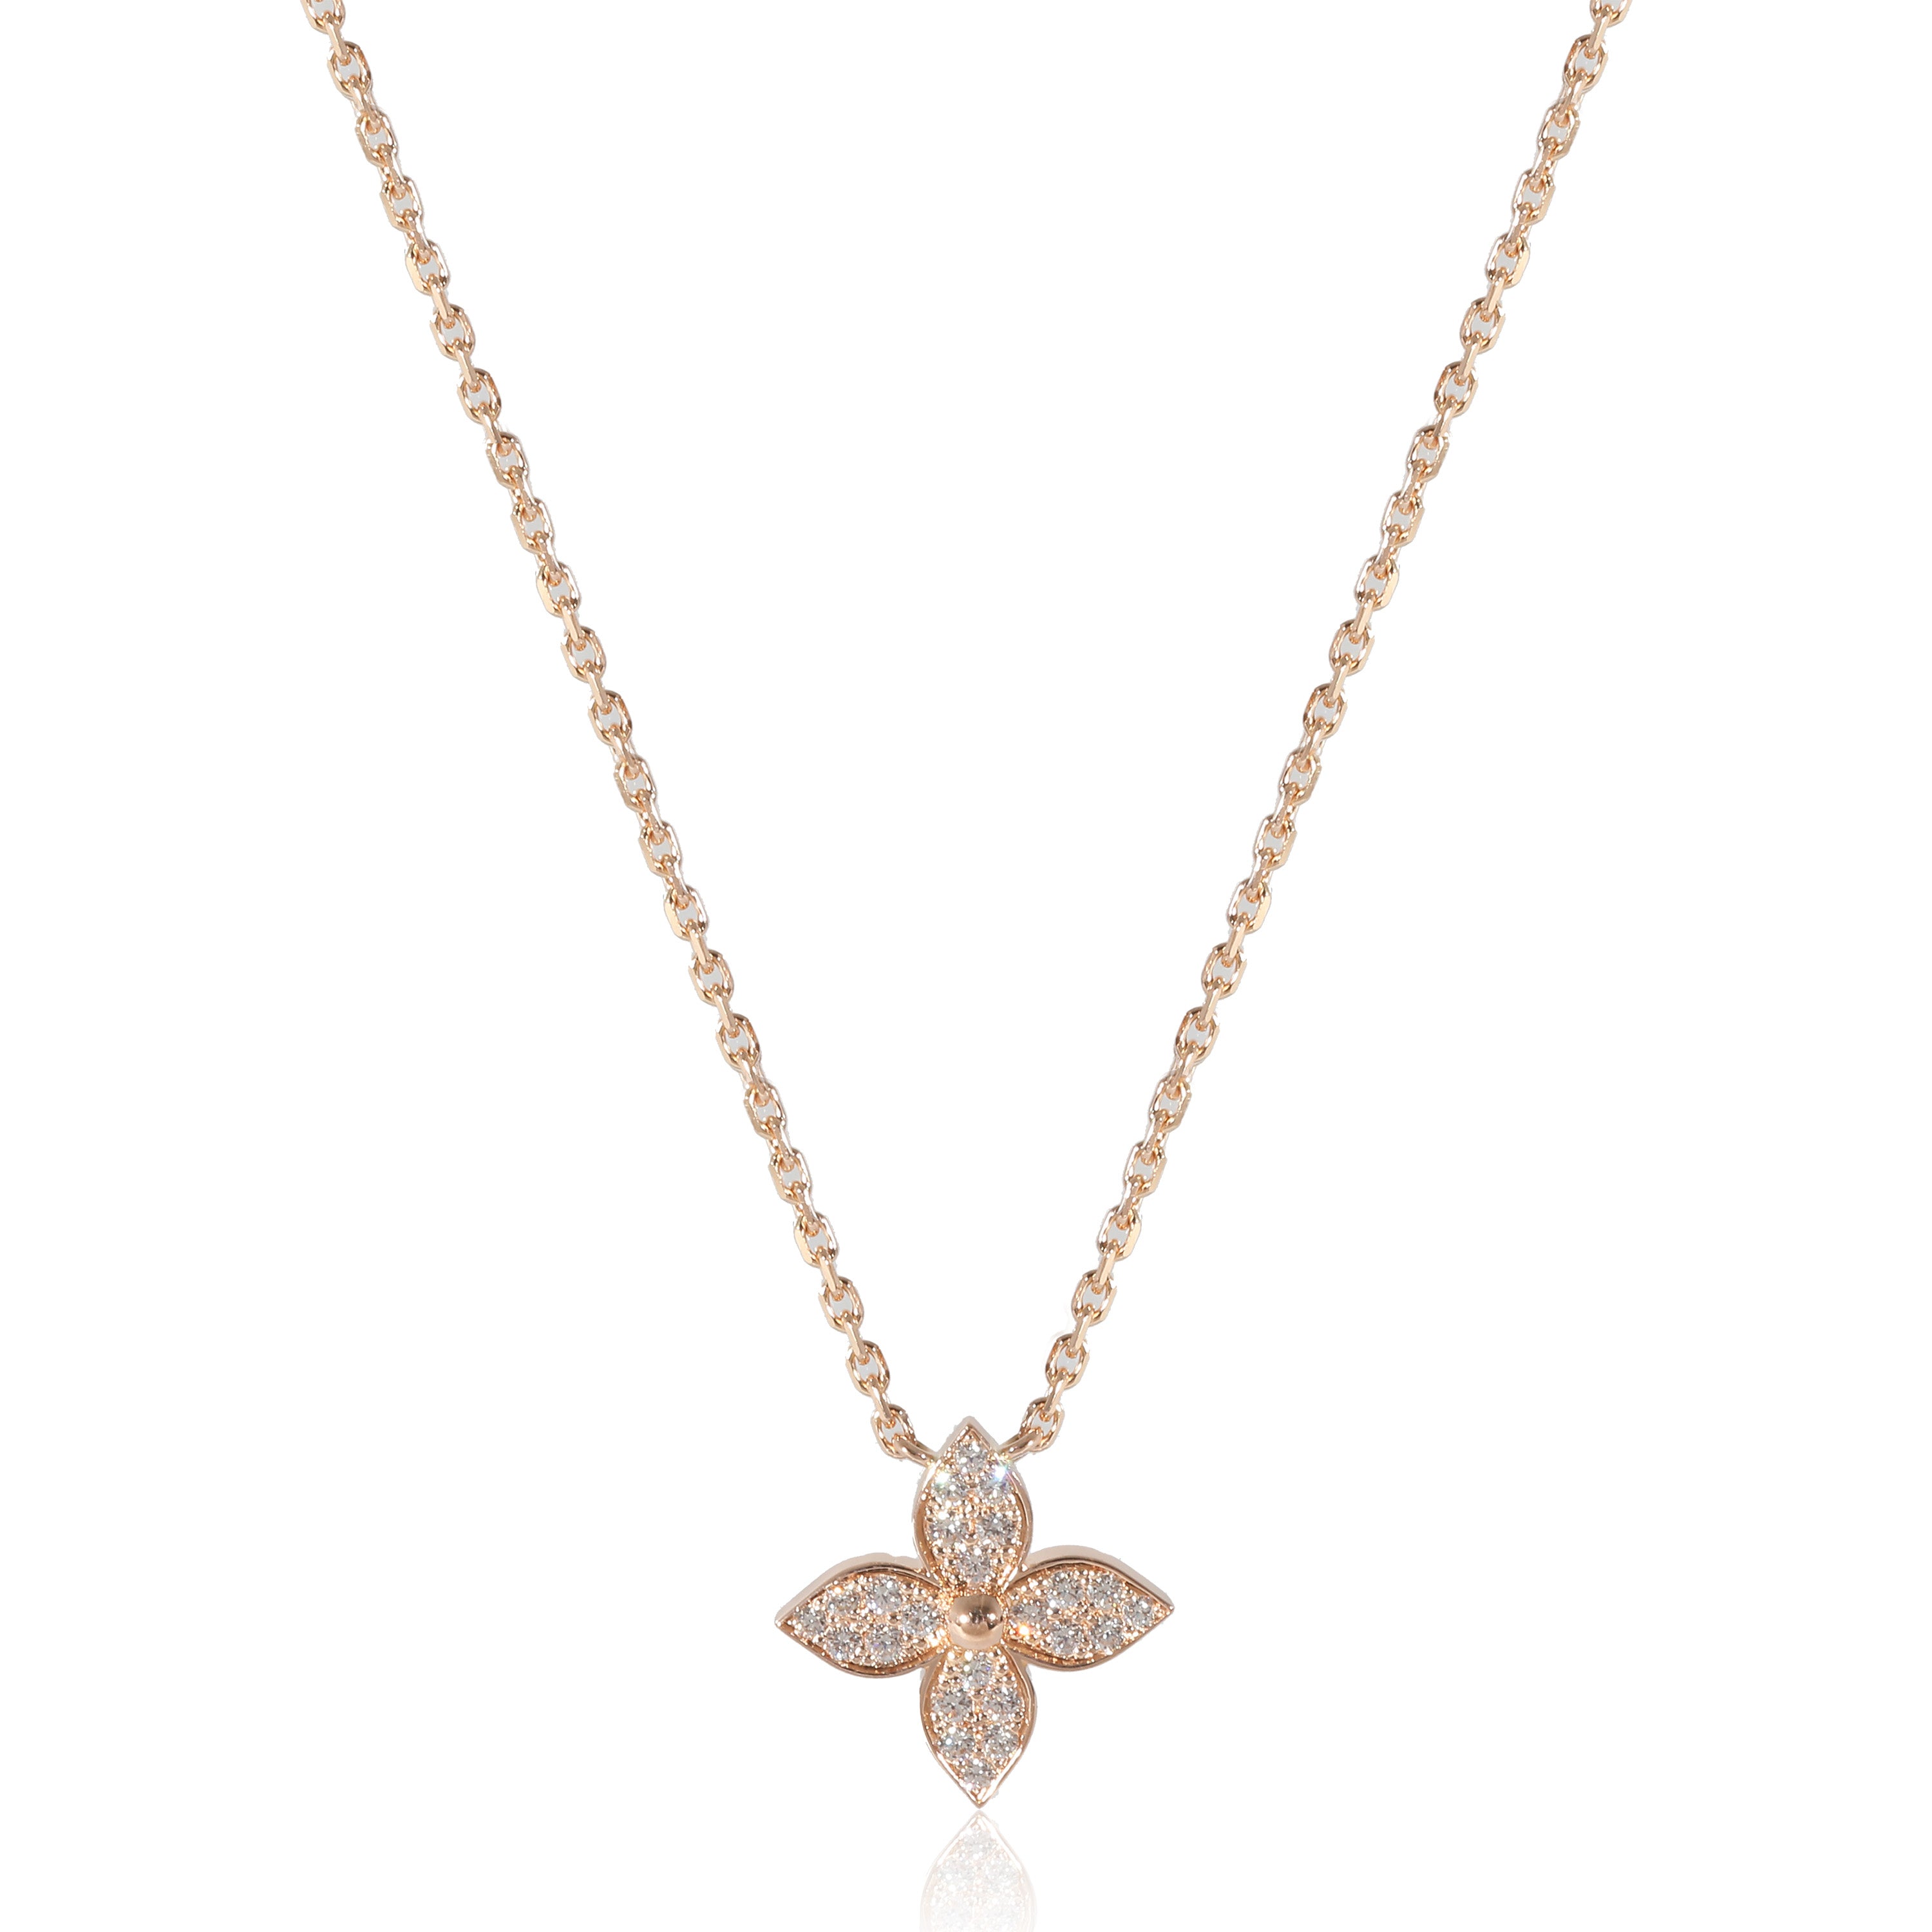 Star Flower Blossom Diamond Pendant Necklace Silver Medium Star